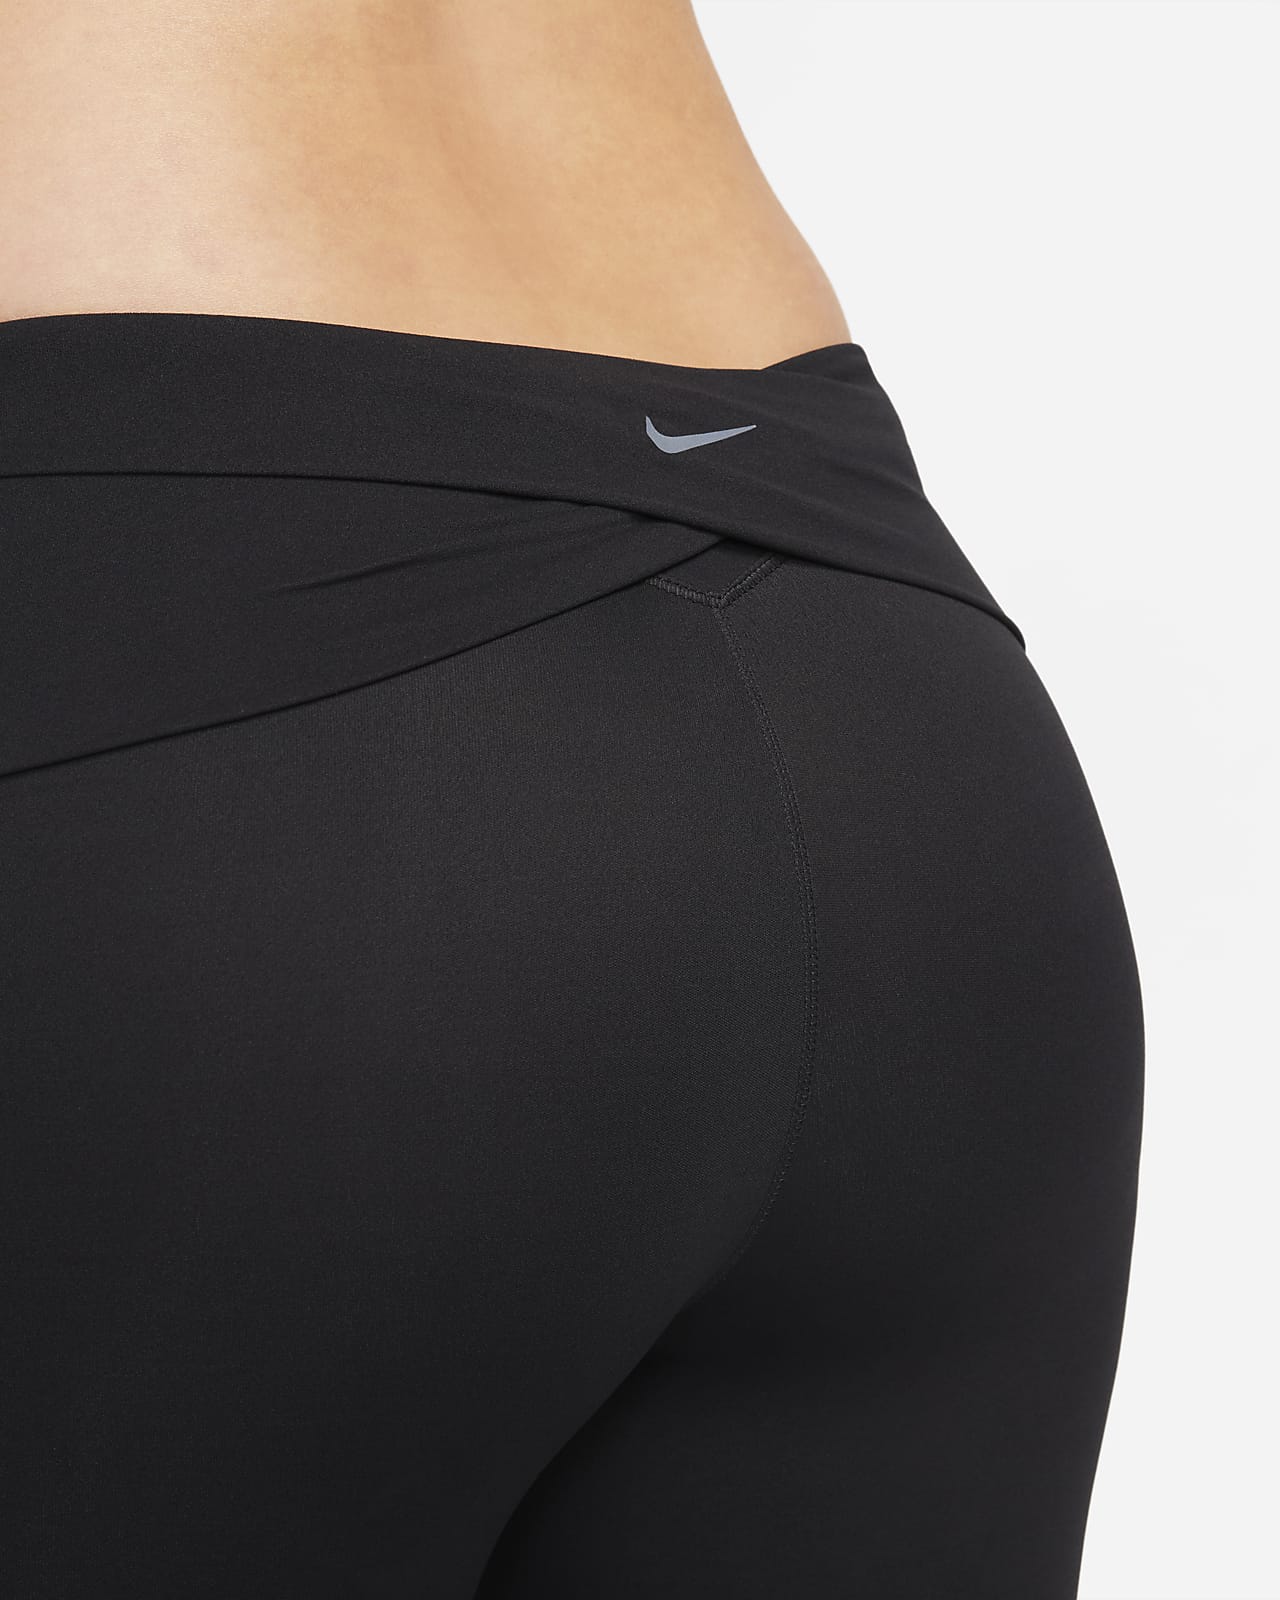 Nike One Maternity Leggings High Waisted Pants Large Short